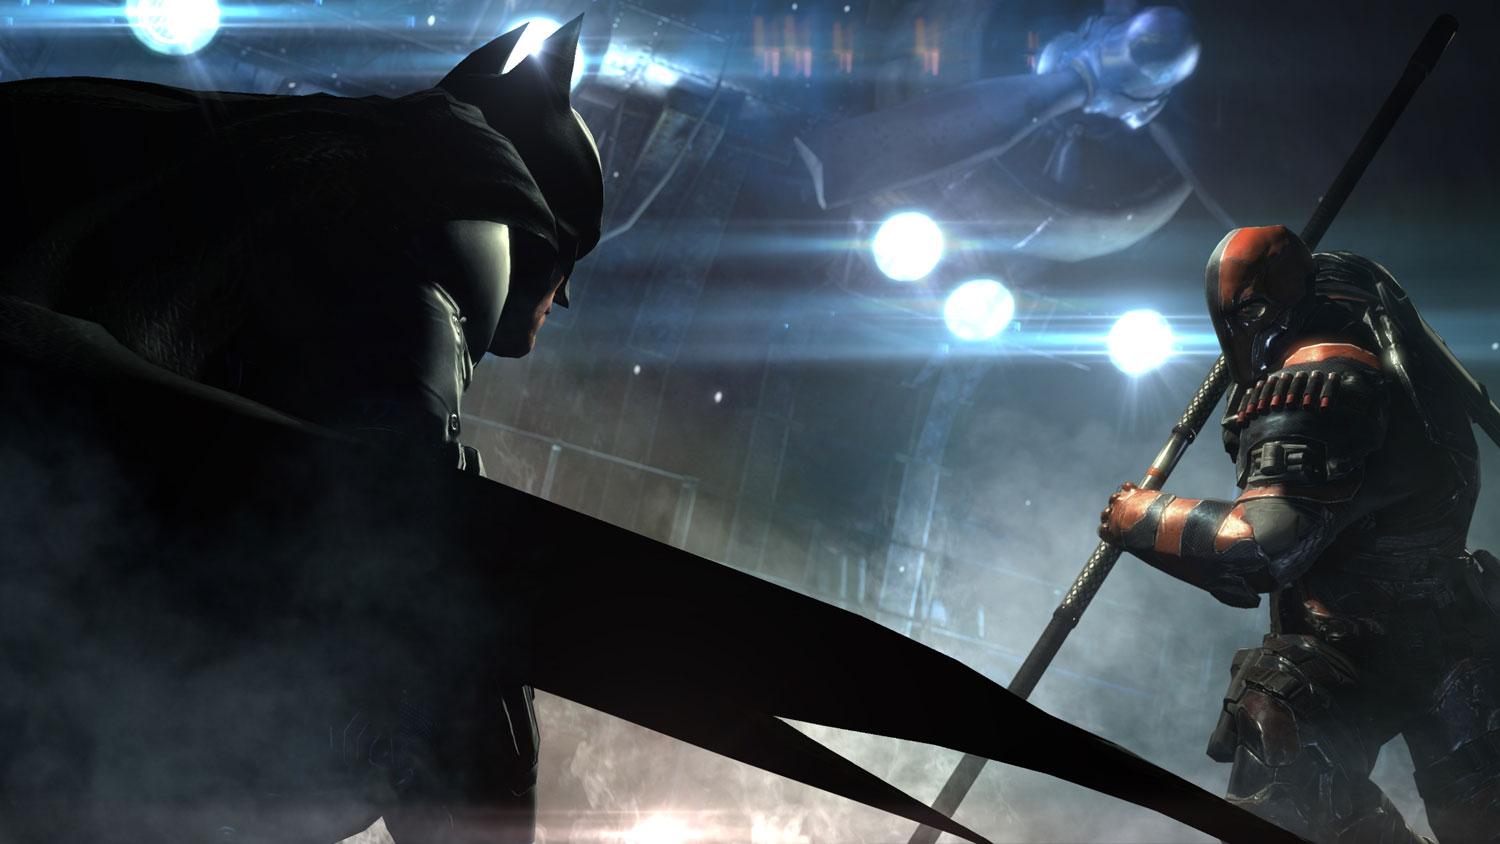 Batman Arkham Origins Mobile Wallpaper - Mobiles Wall